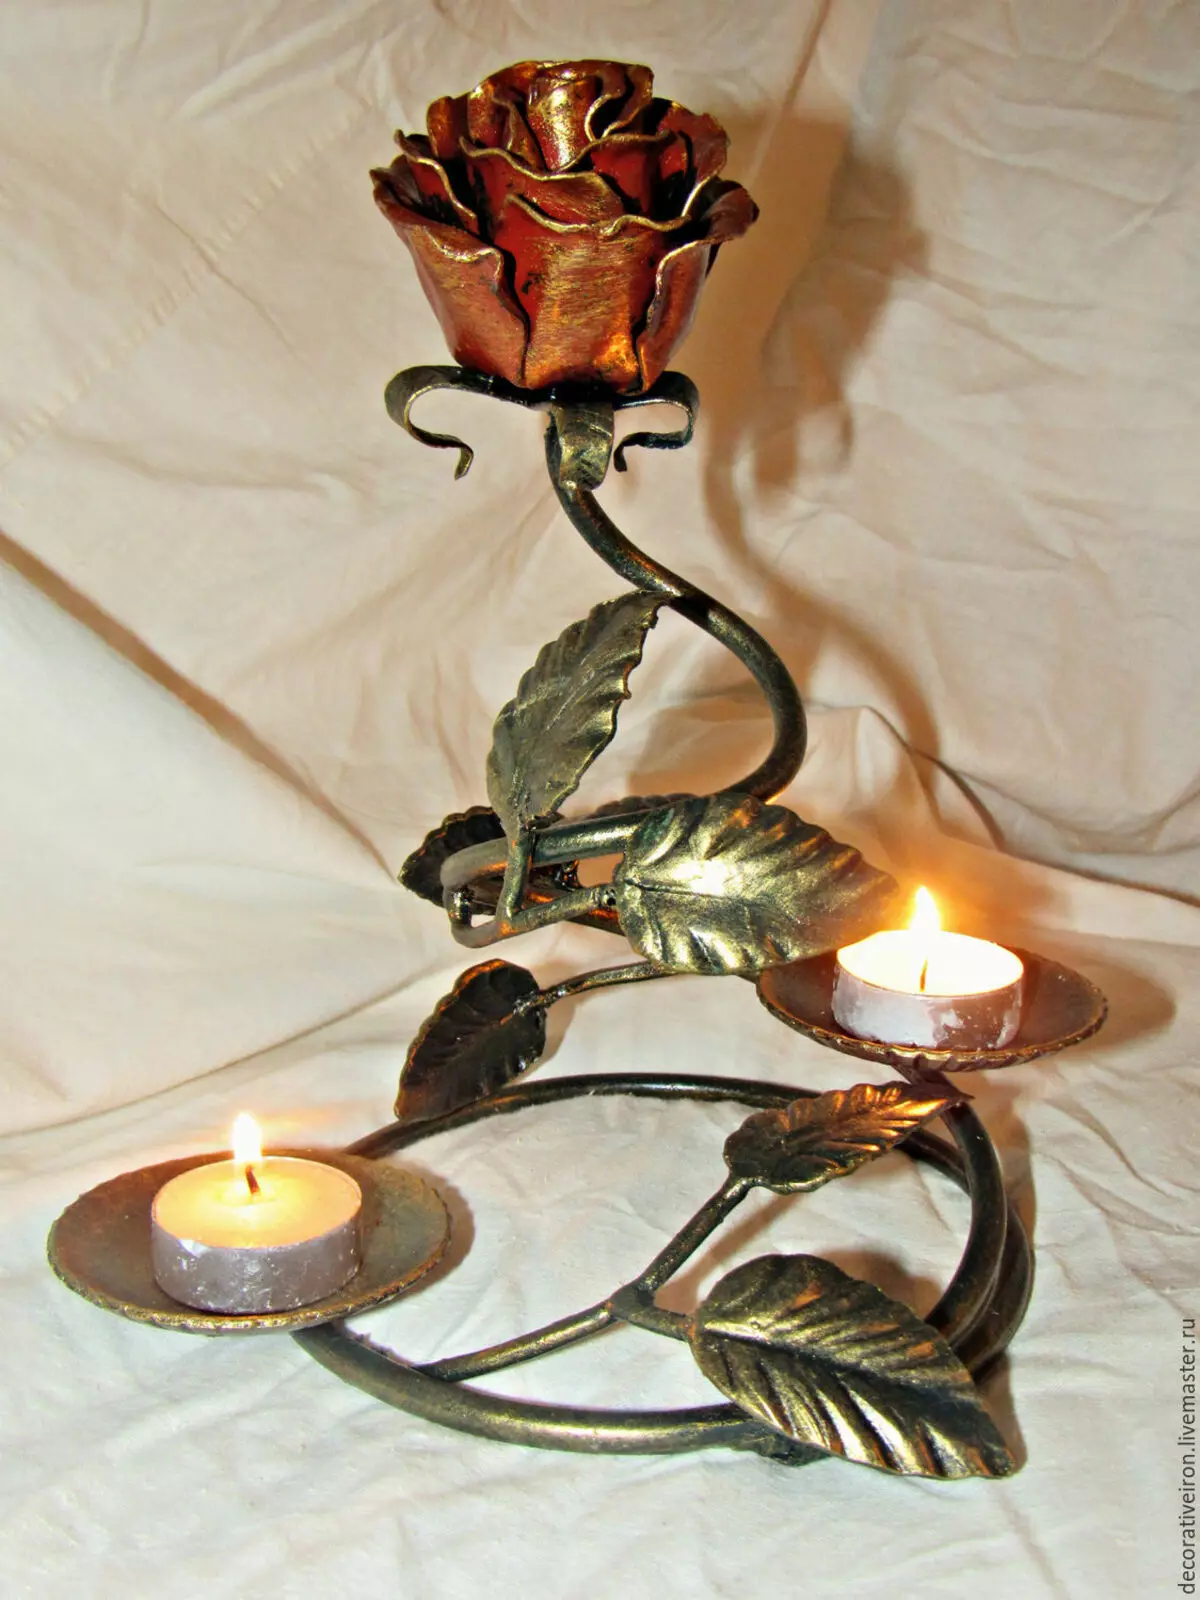 Metal Candlesticks: ლითონის შავი სასანთლე და ოქროს, ერთი სანთელი და 5 სანთლები, სახით ირმის და სხვა რკინის დეკორატიული სასანთლე 13157_26